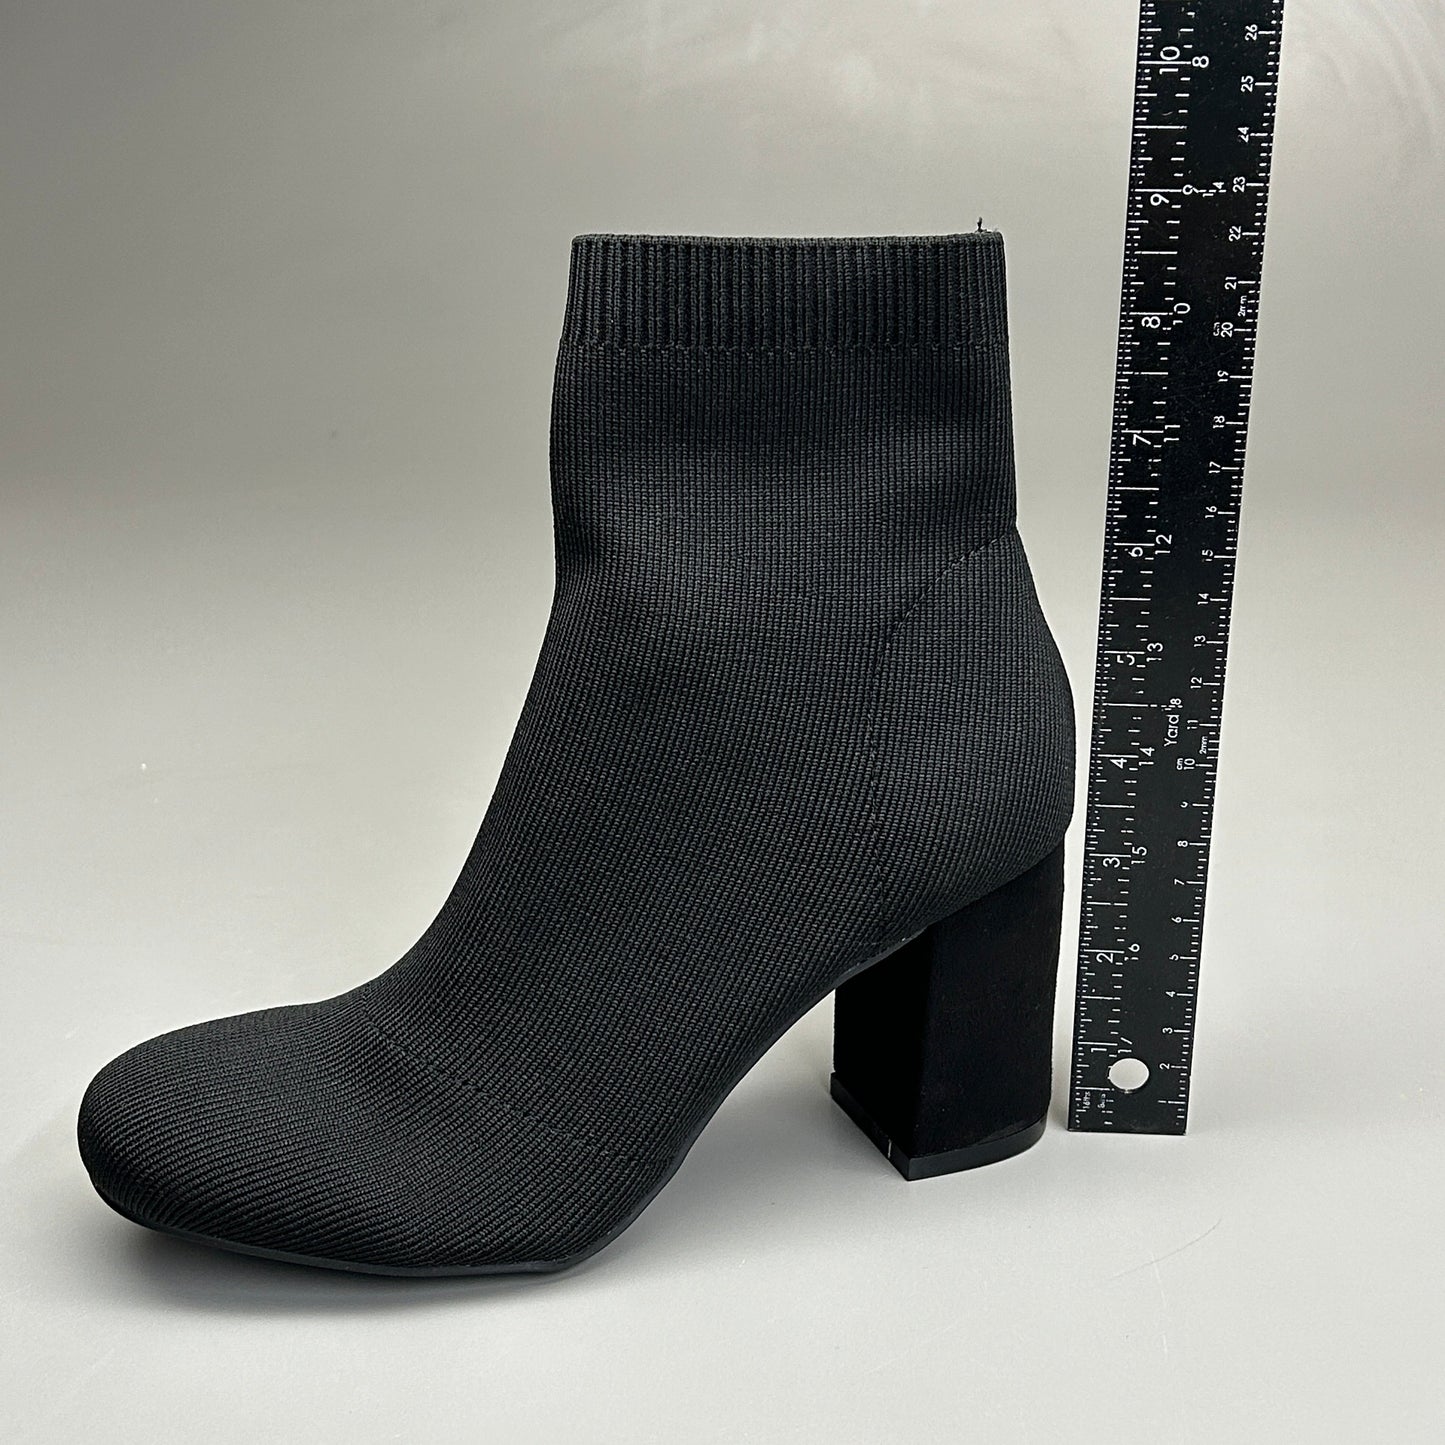 MIA Erika Fly Knit Booties Dress Boots Black 2” Heel Sz 13 GS7553115Y (New)